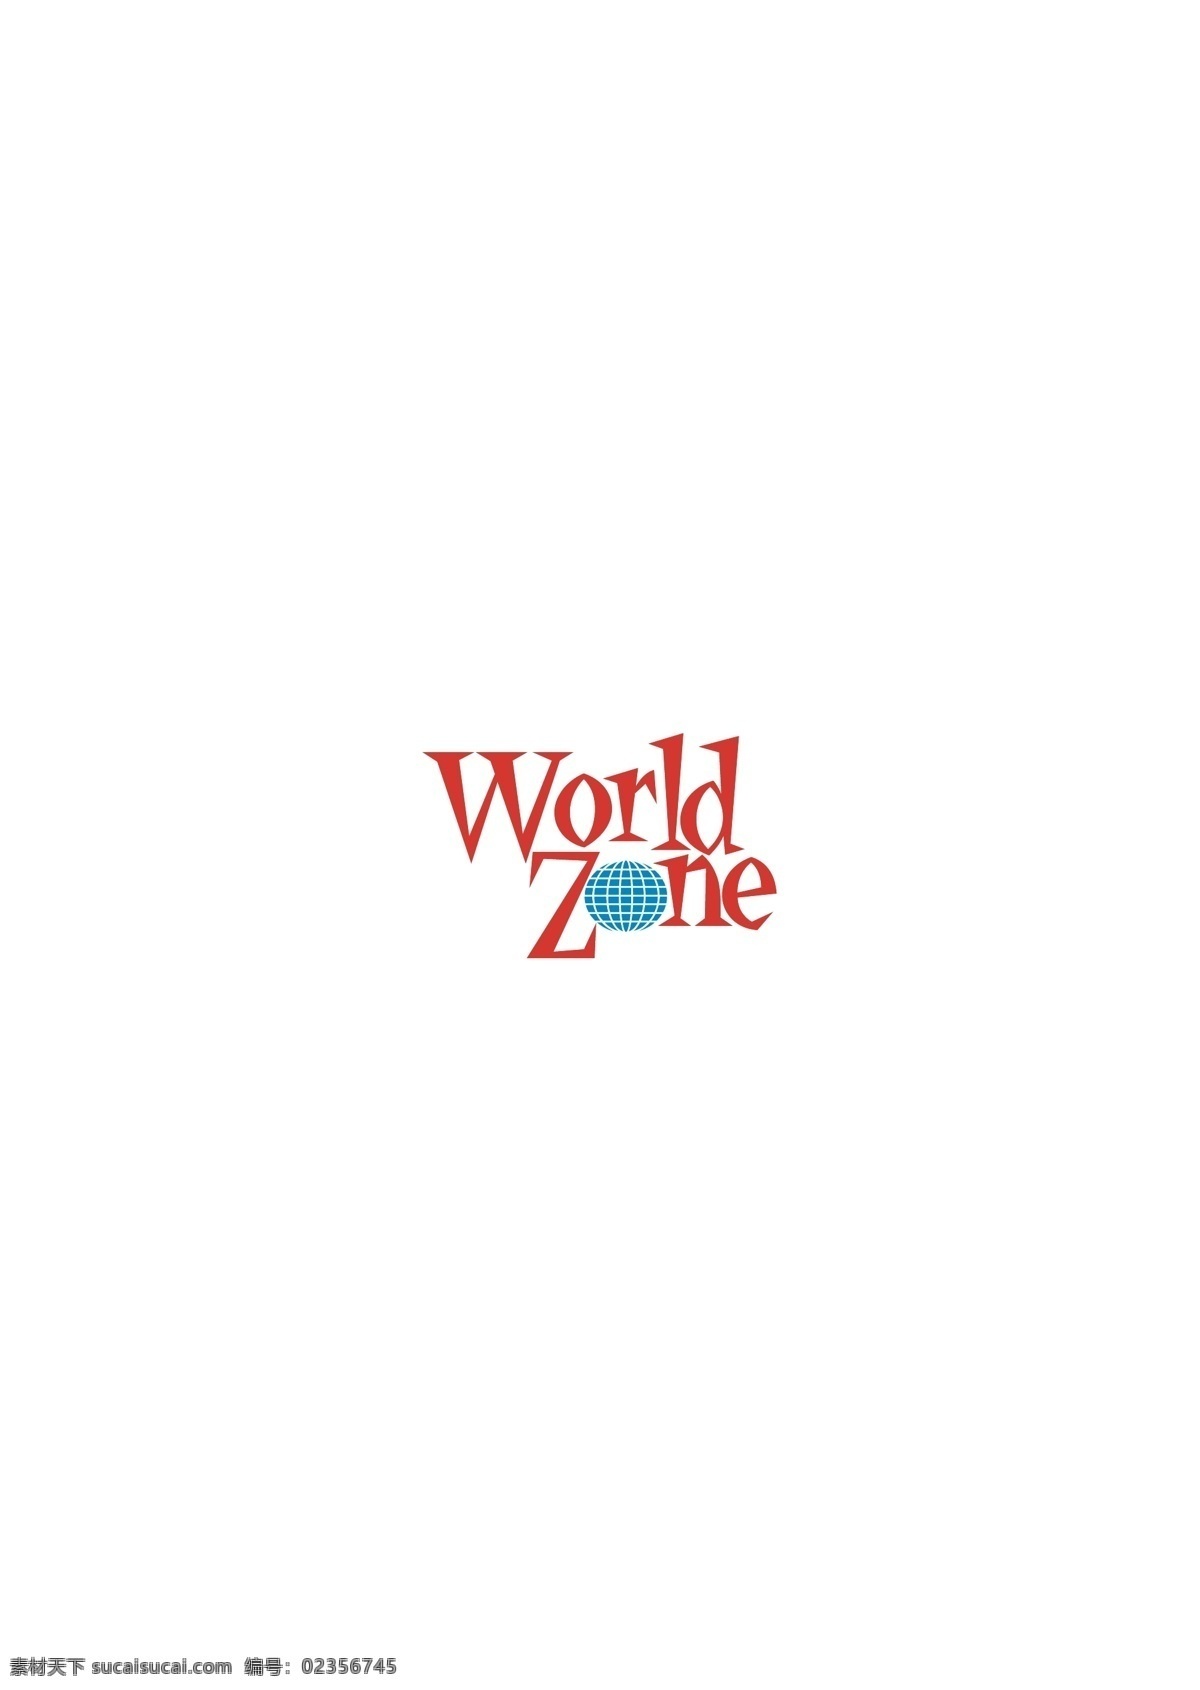 world zone logo 设计欣赏 标志设计 欣赏 矢量下载 网页矢量 商业矢量 logo大全 红色